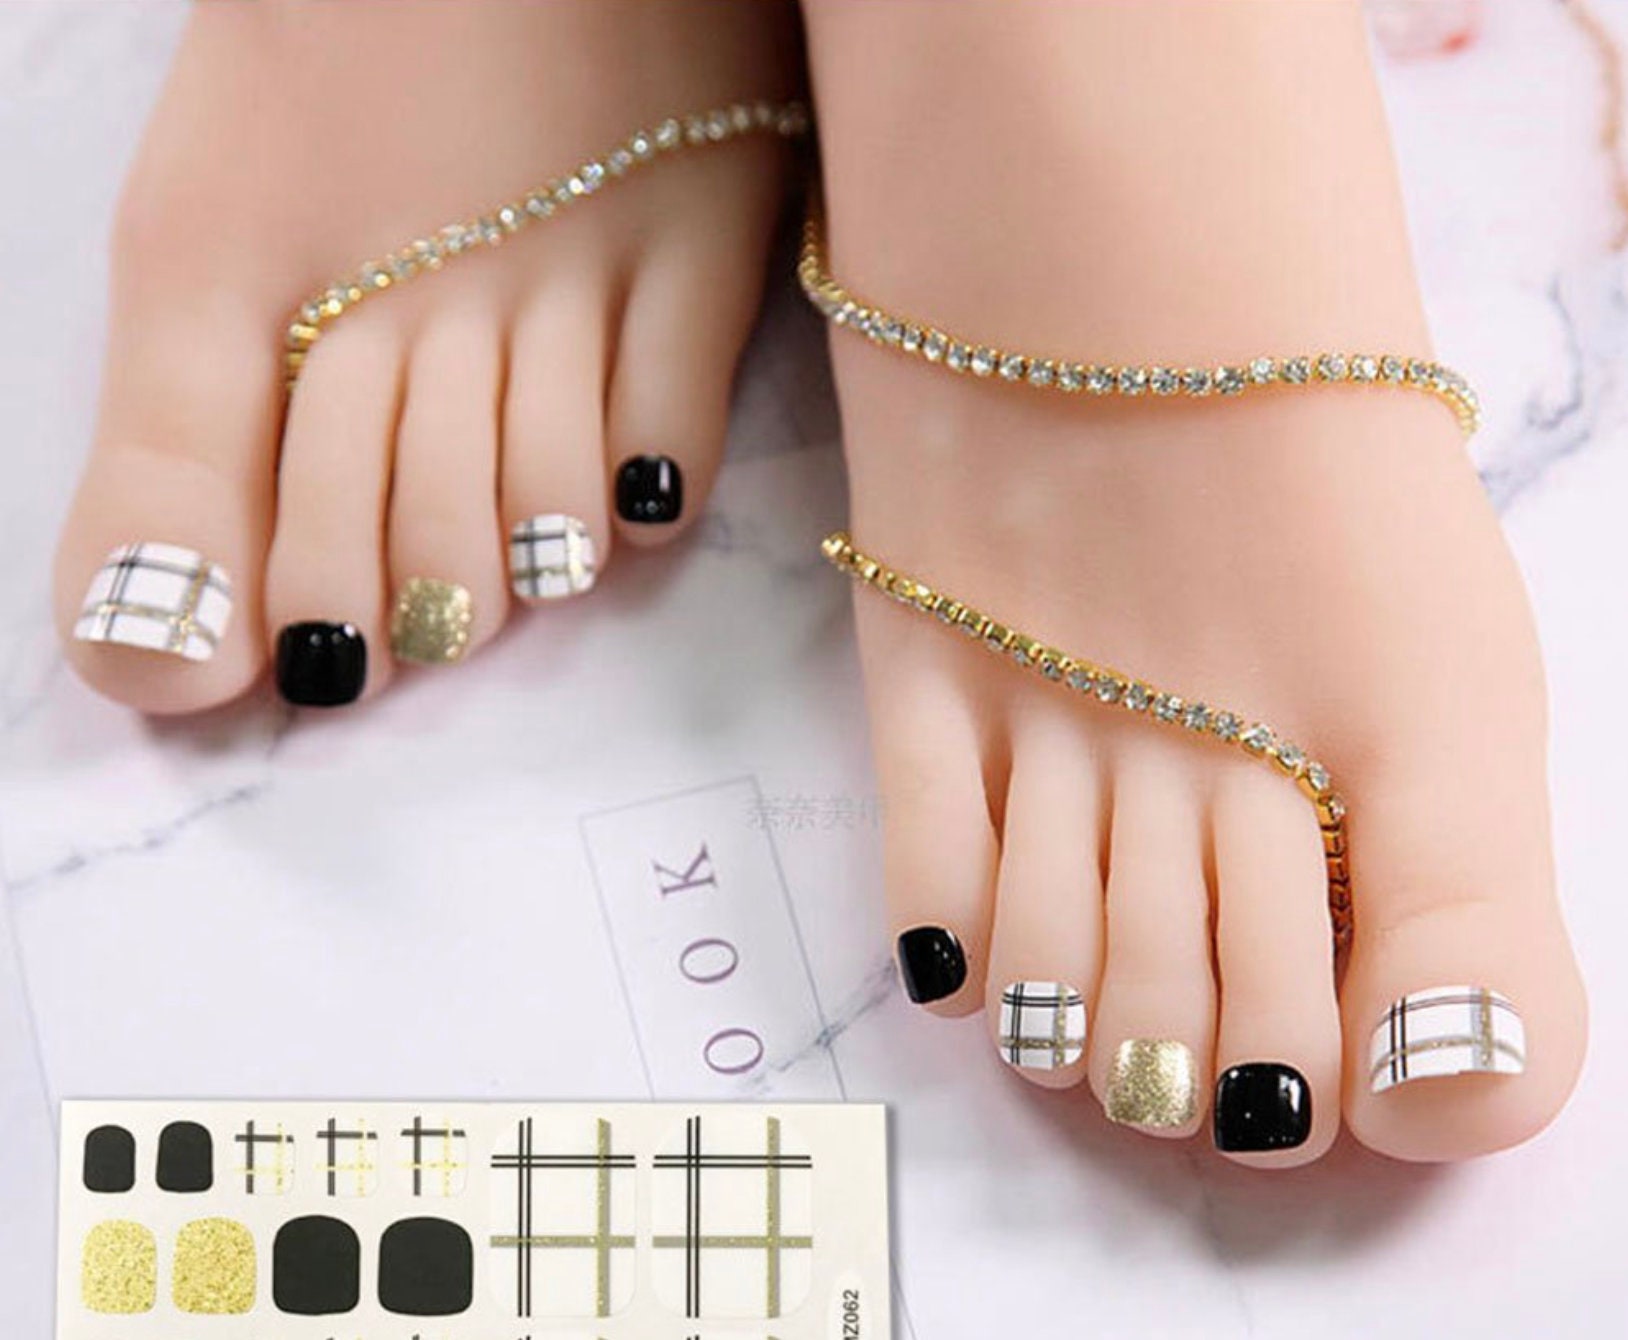 Happy Feet | Cute toe nails, Toe nail designs, Cute nails